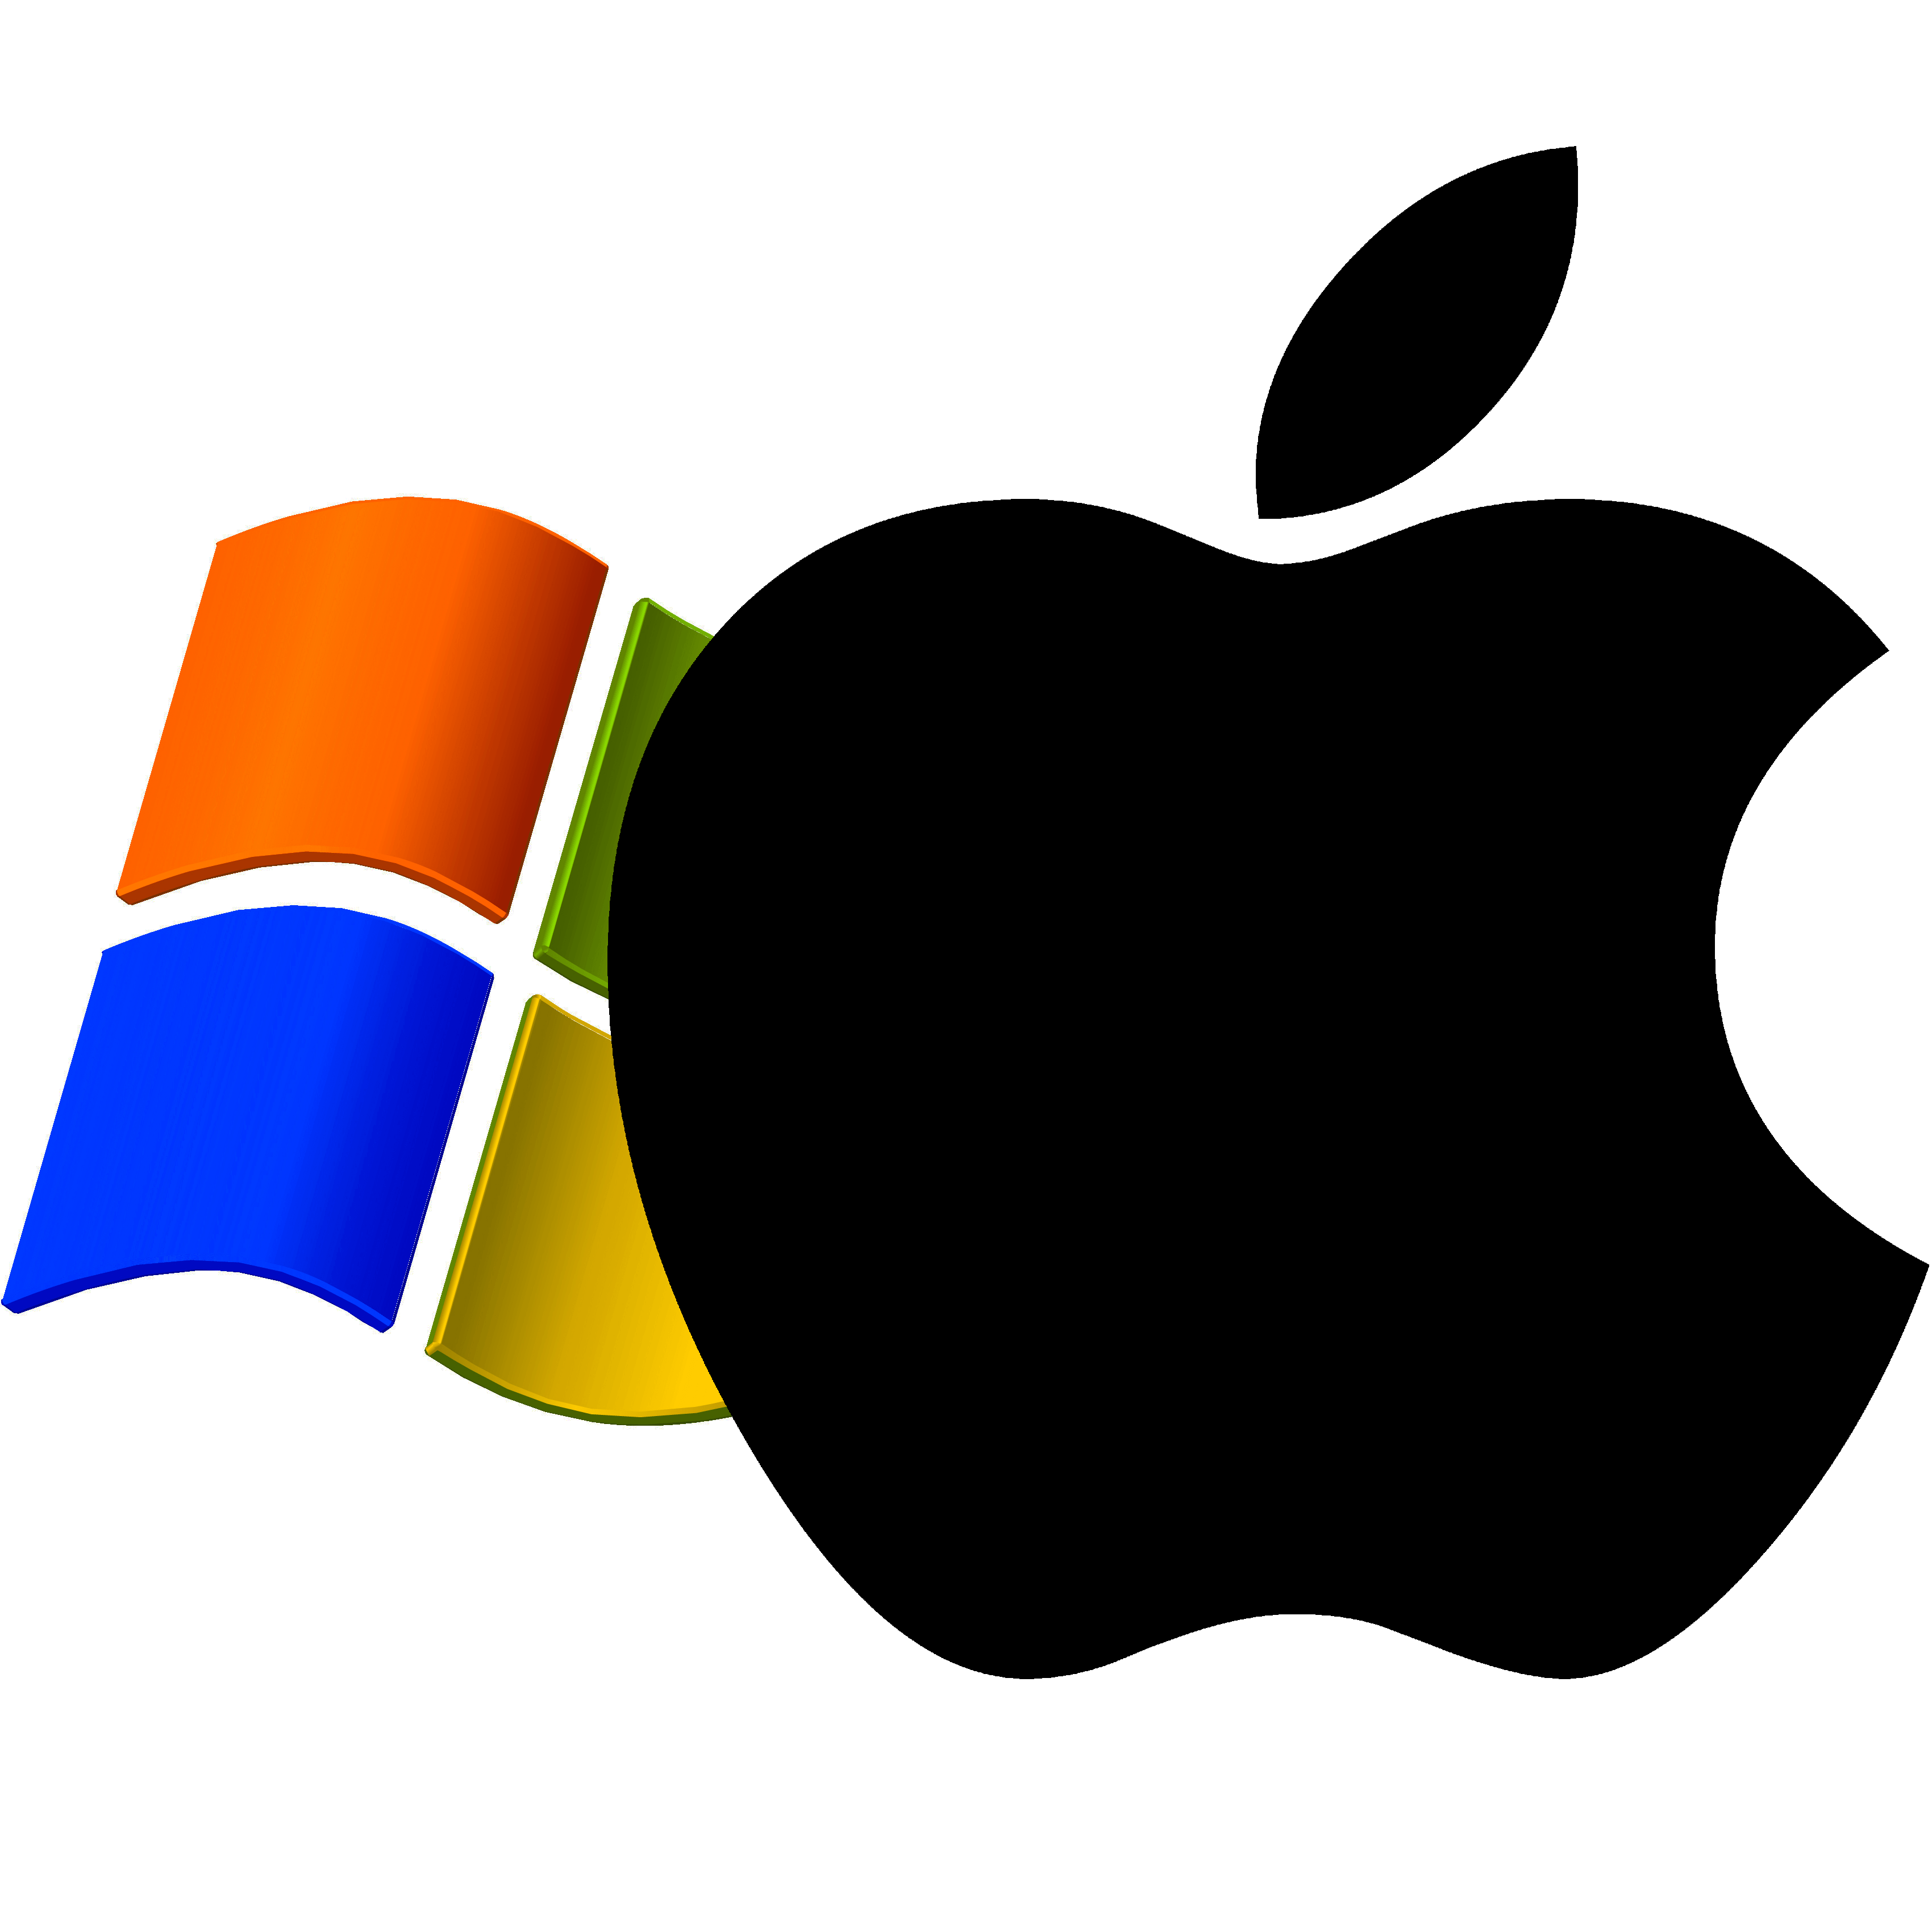 Apple Windows Logo - Windows XP logo superimposed by Apple logo | The Mac Security Blog